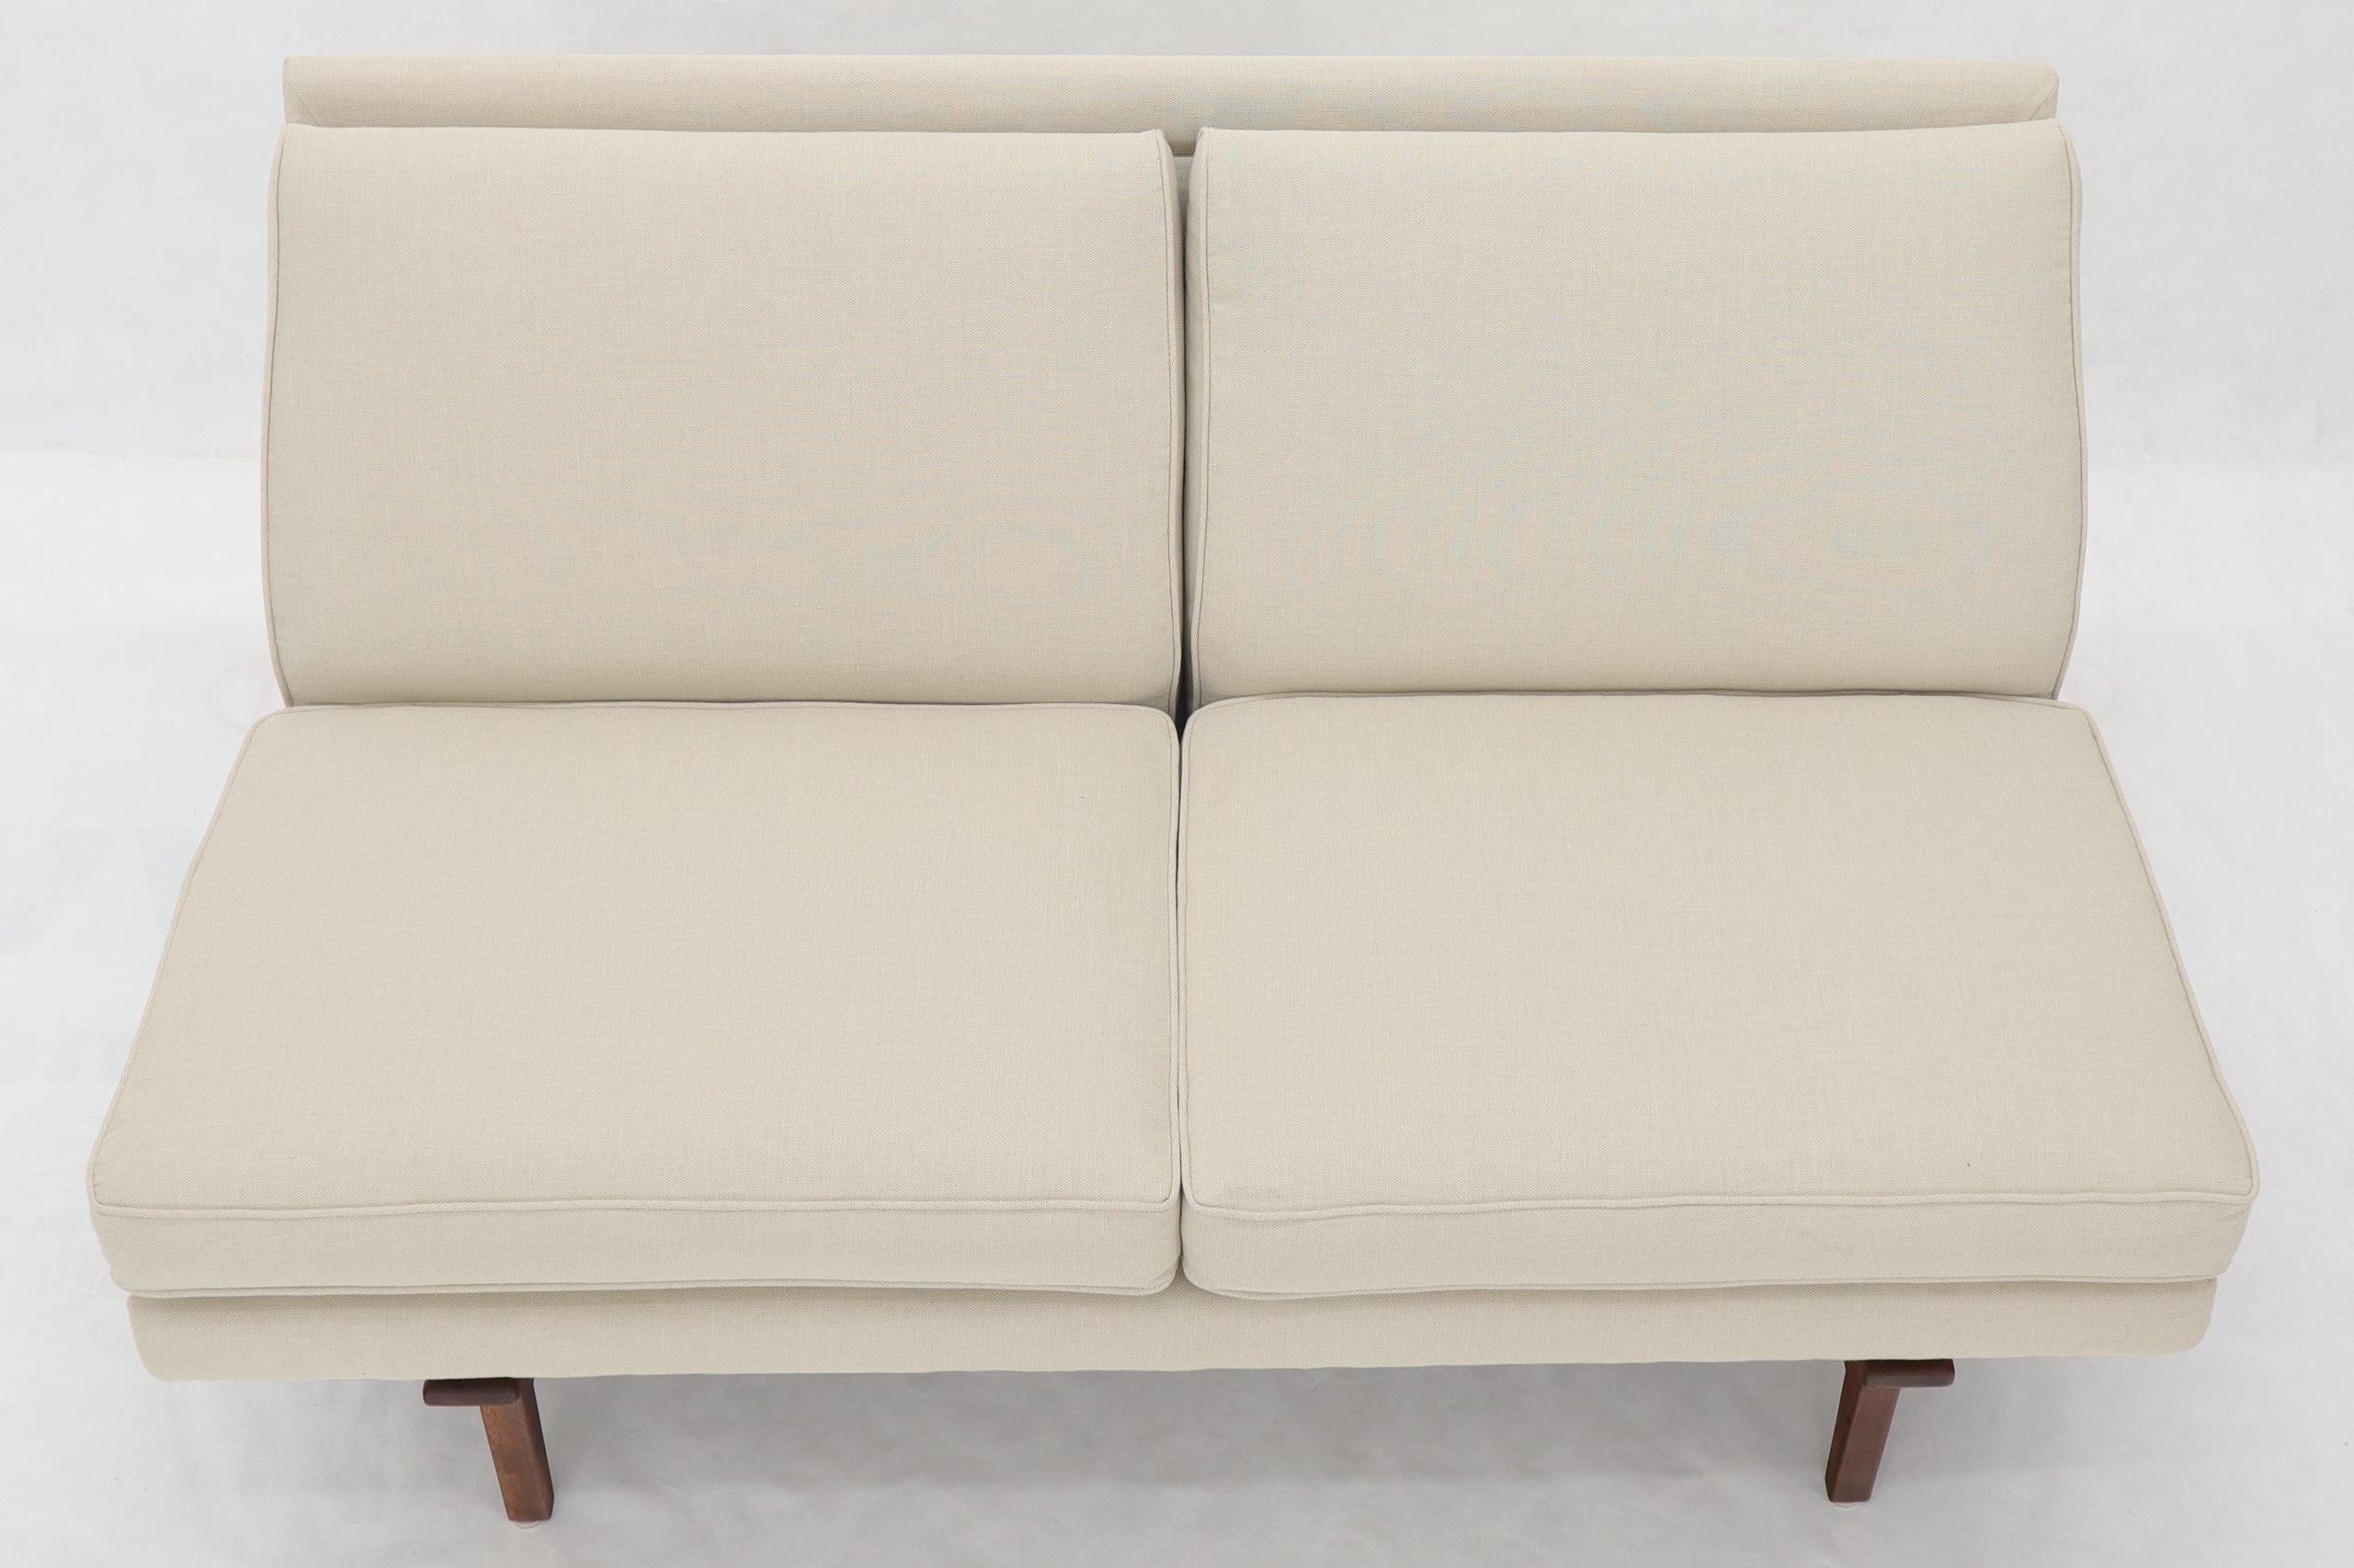 20th Century Jens Risom New Canval like Upholstery Loveseat Sofa by Jens Risom